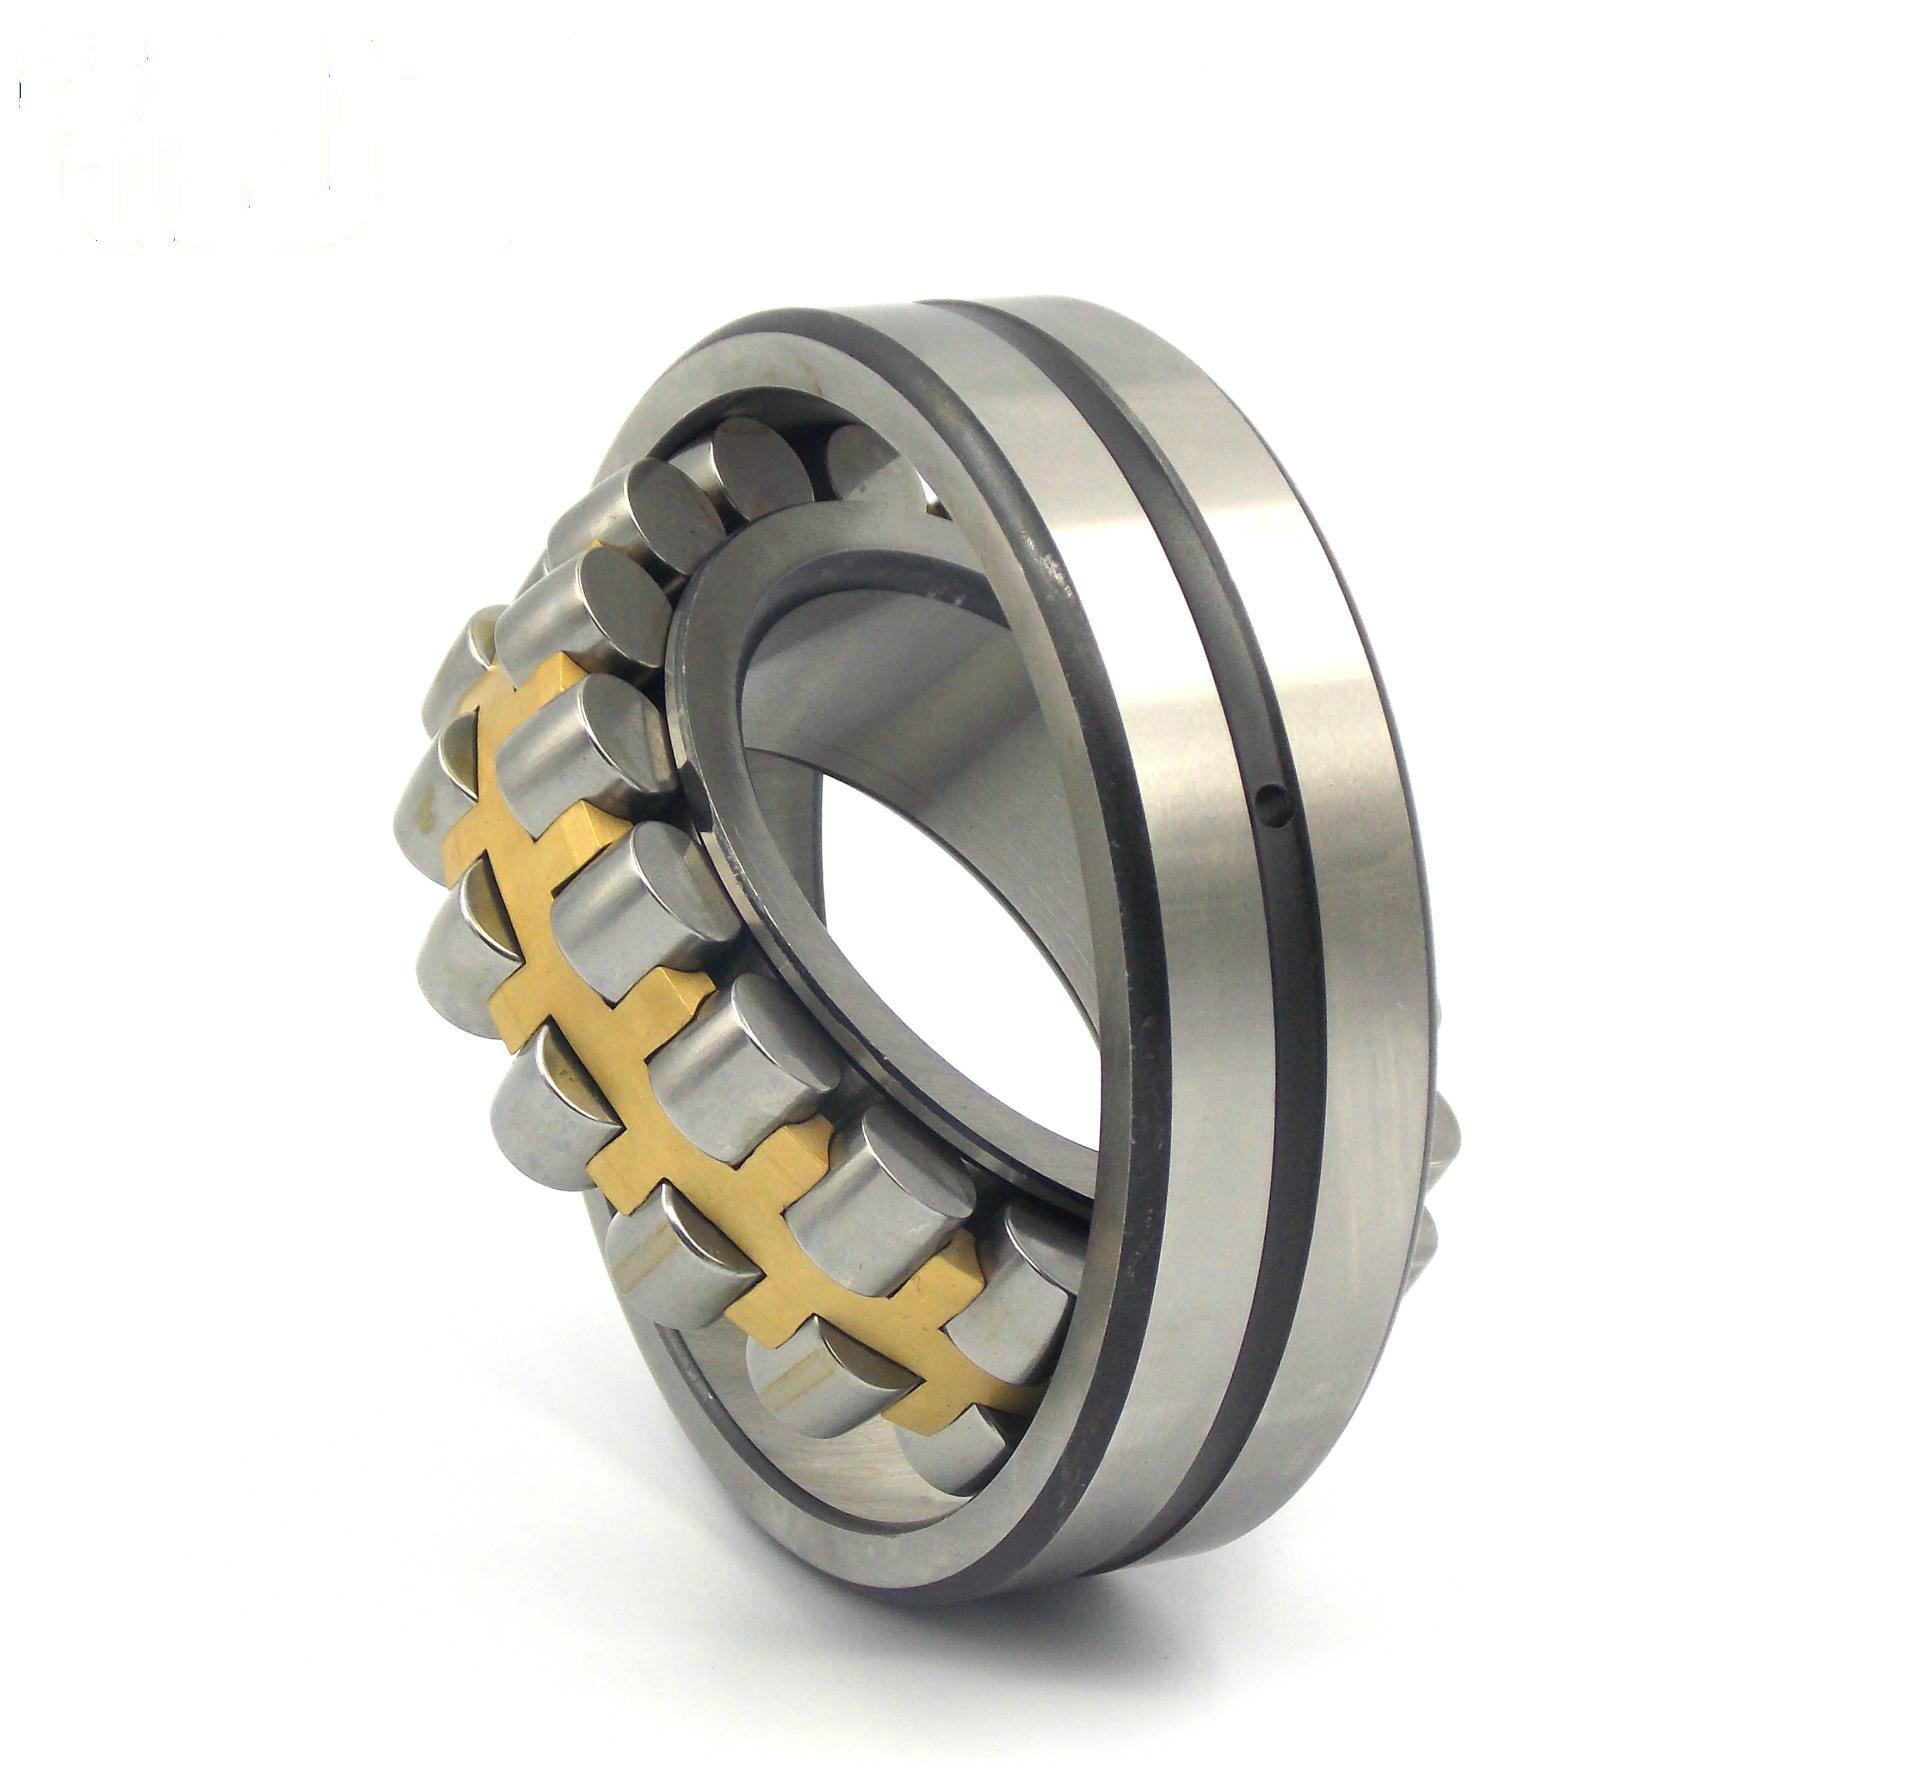  NJ 224 M Cylindrical roller bearing